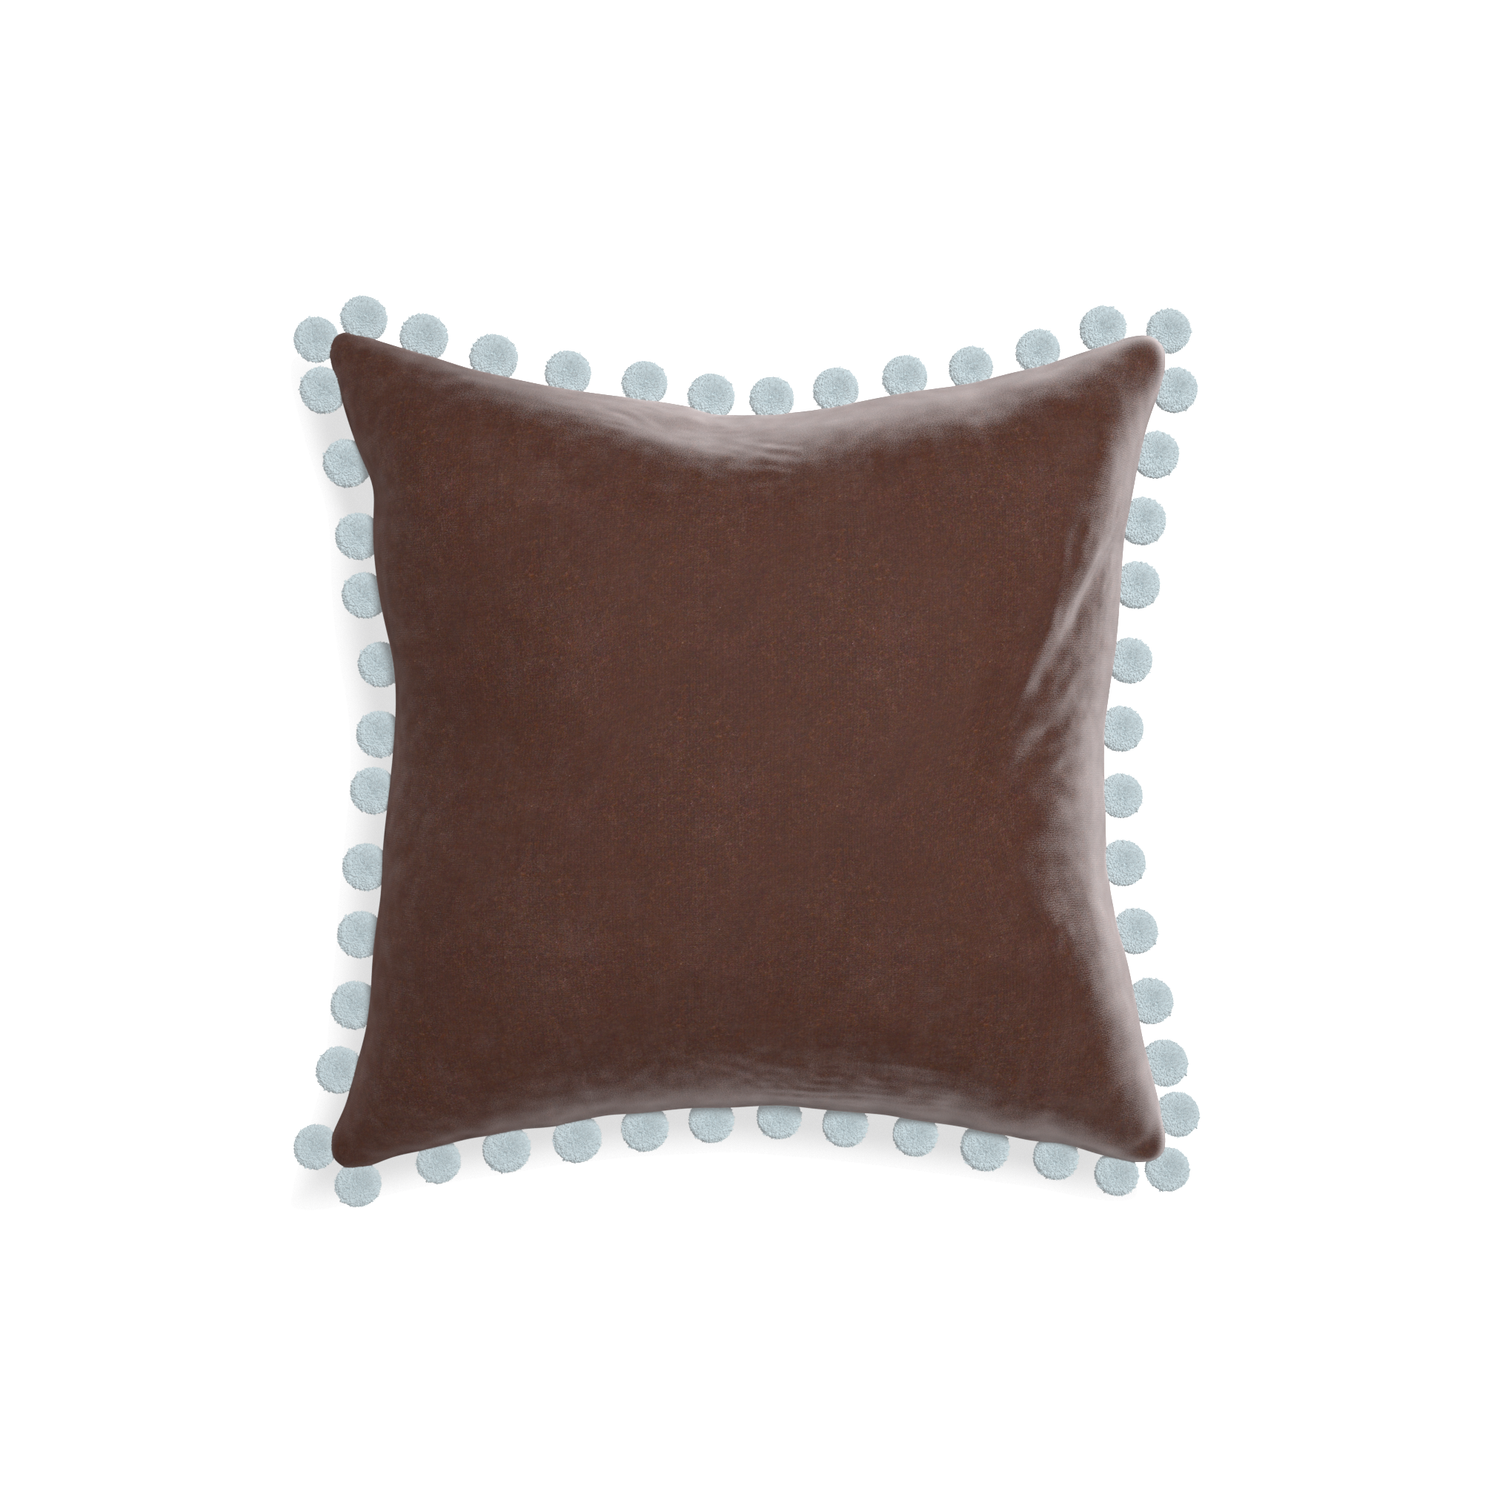 18-square walnut velvet custom pillow with powder pom pom on white background